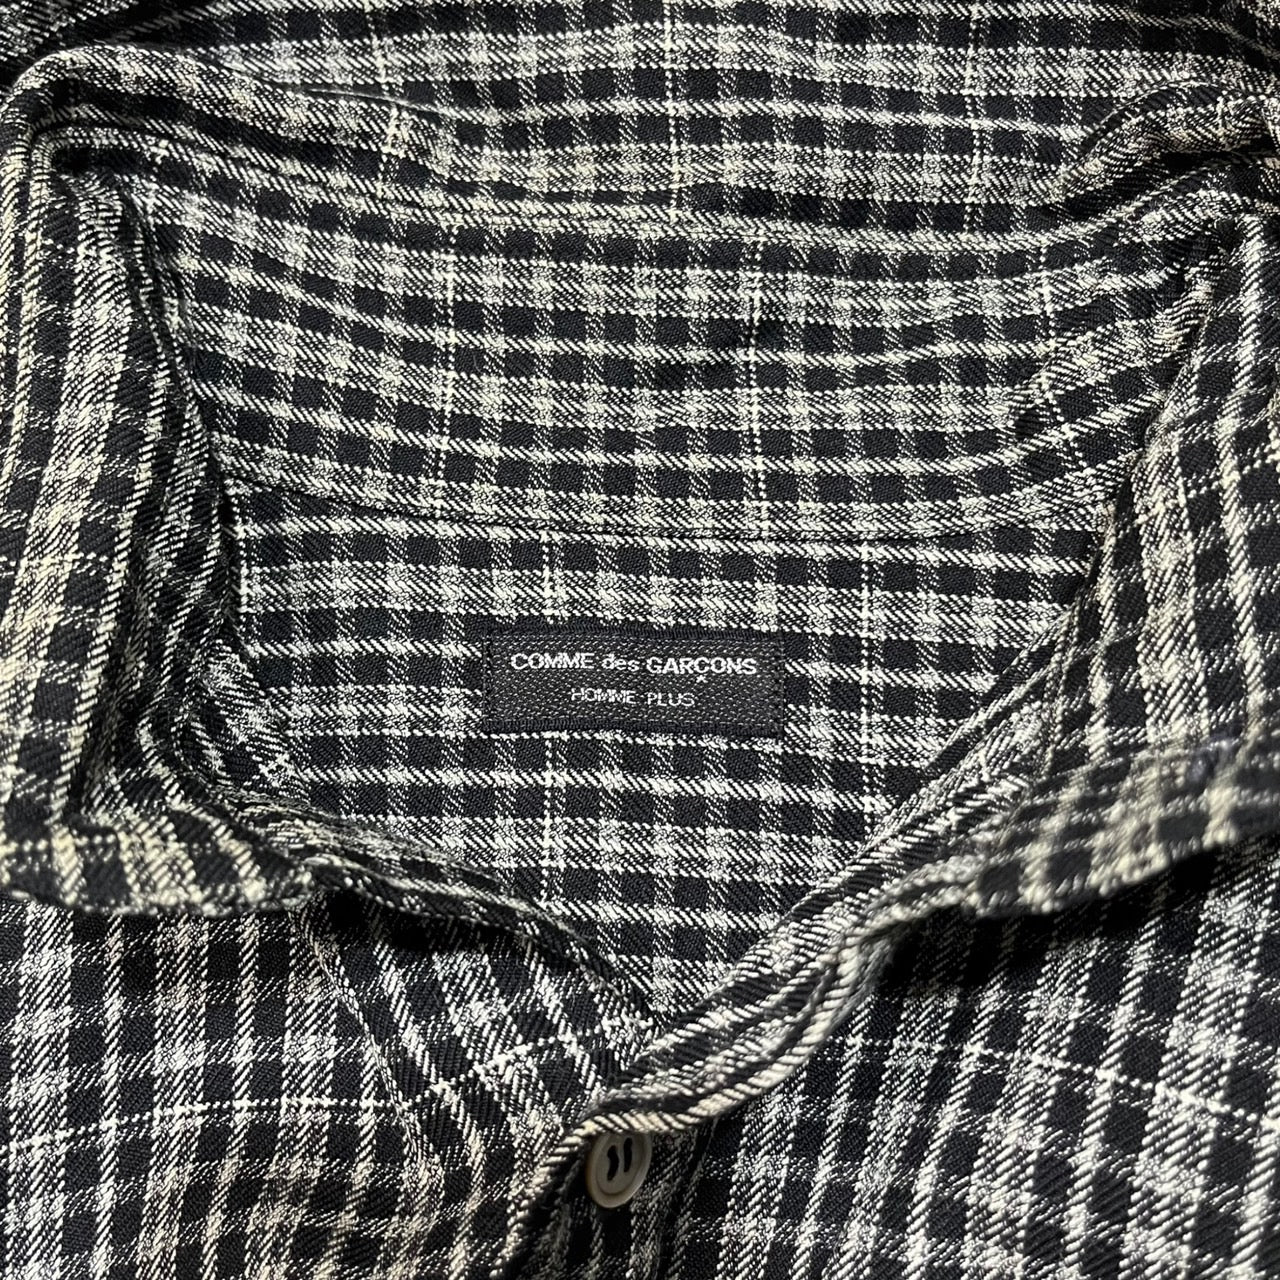 COMME des GARCONS HOMME PLUS(コムデギャルソンオムプリュス) 80's wide silhouette wool check shirt/ワイドシルエットウールチェックシャツ/80年代/ヴィンテージ PB-050010 SIZE FREE ブラック×ホワイト